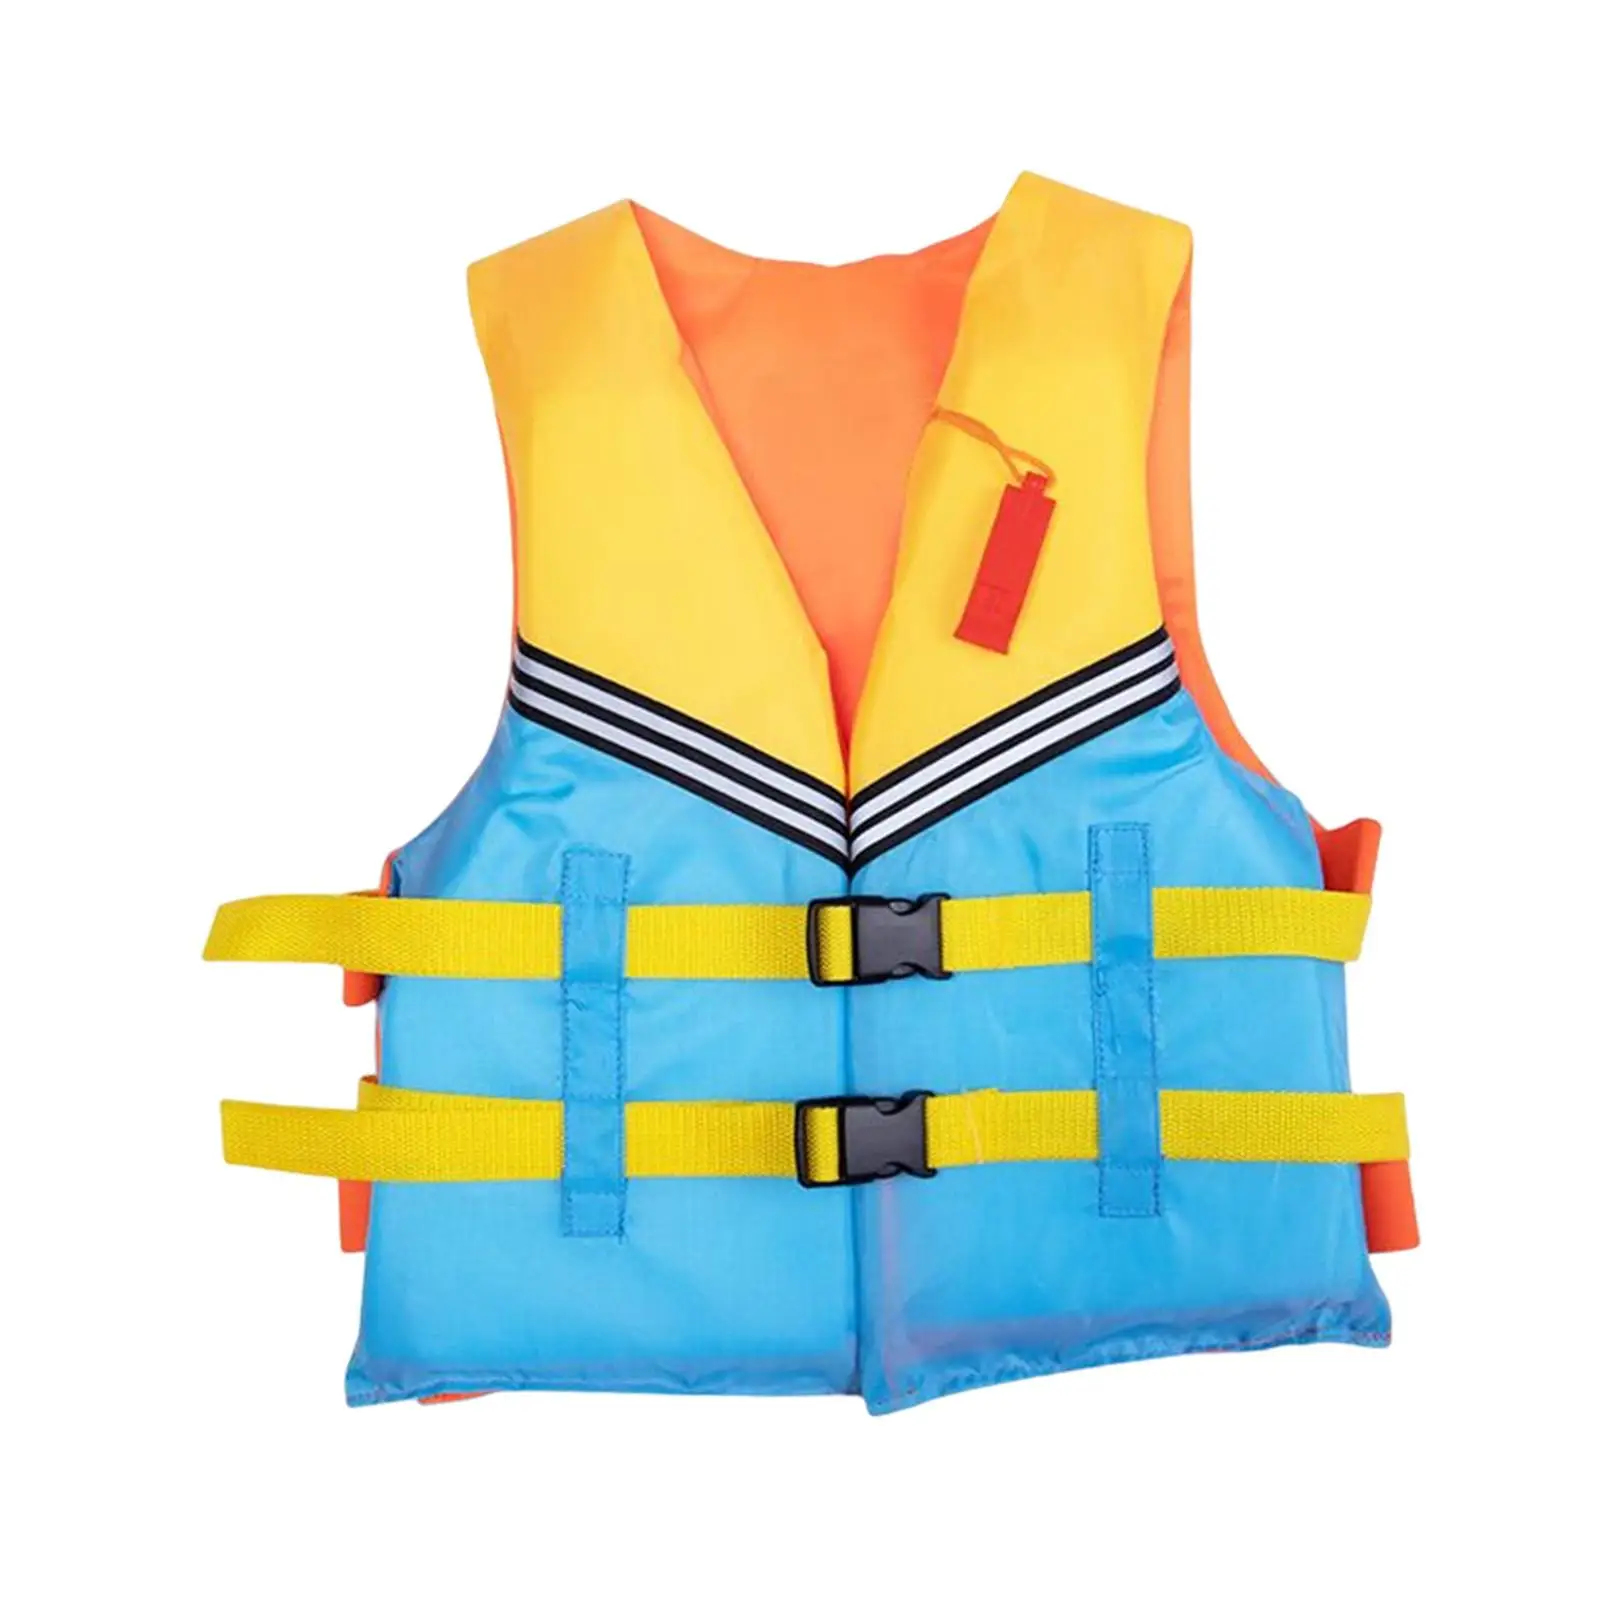 Life Jacket Adjustable Waist Belts Safety Gear Lightweight Buoyancy Aid Swim Vest for Floating Surfing Swimming Water Sport